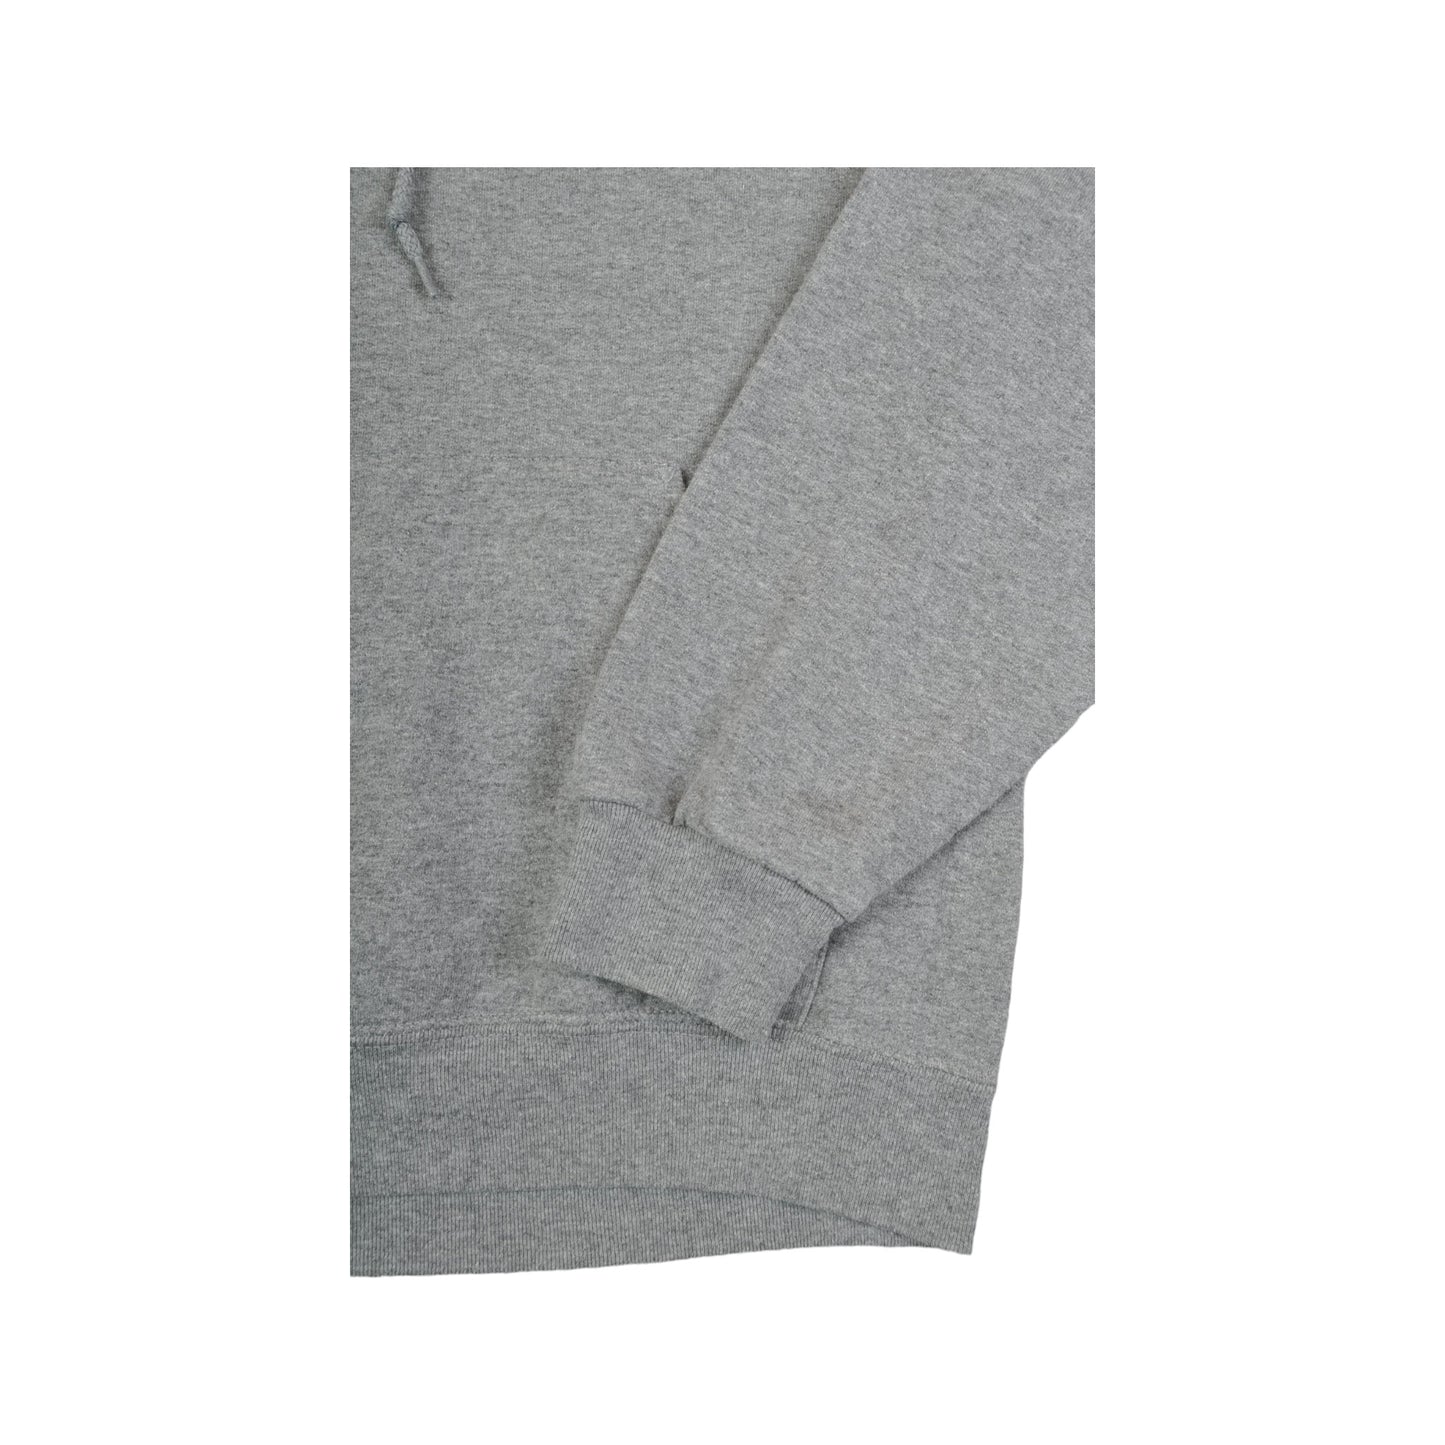 Vintage Douglas Macarthur Generals Hoodie Sweatshirt Grey Small